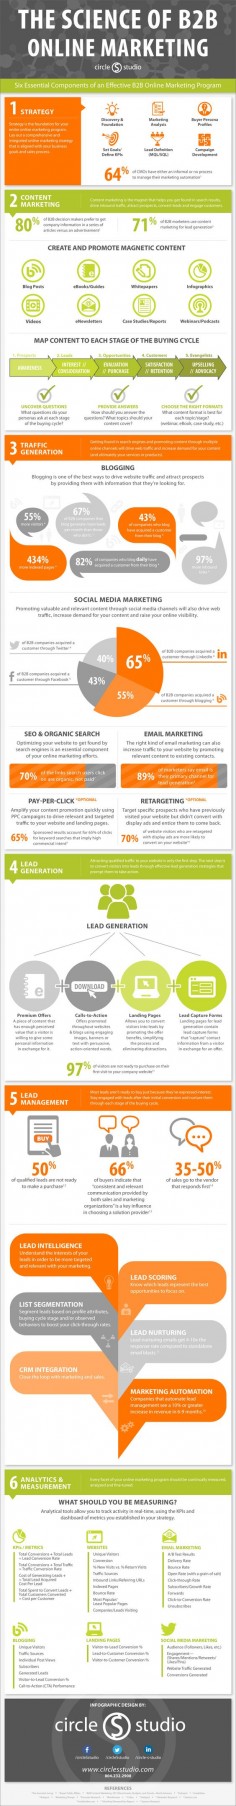 Effective B2B Online #Marketing Plan #infographic #digitalmarketing